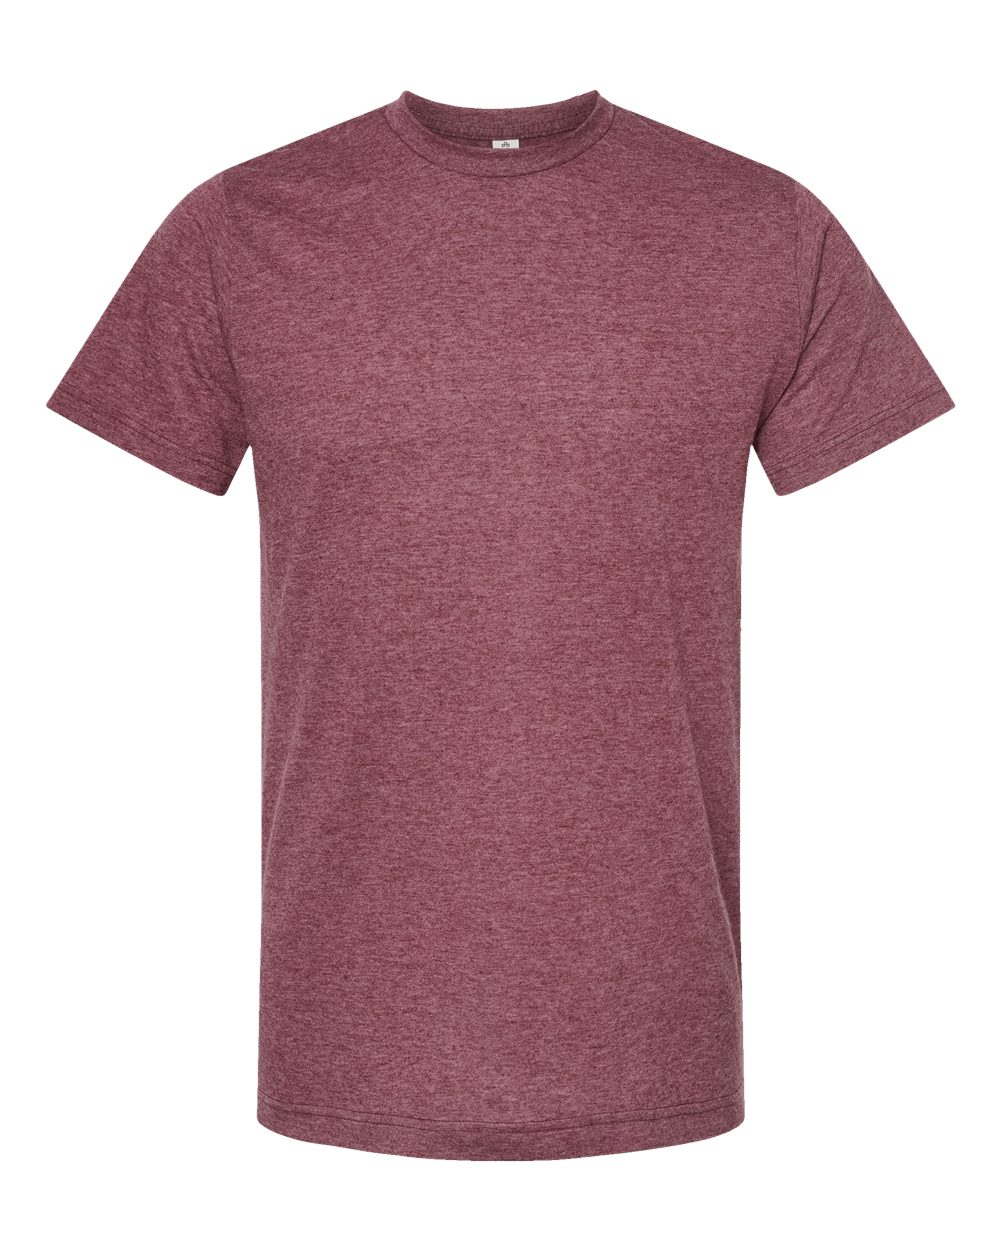 Tultex 241 - Unisex Poly-Rich Blend T-Shirt